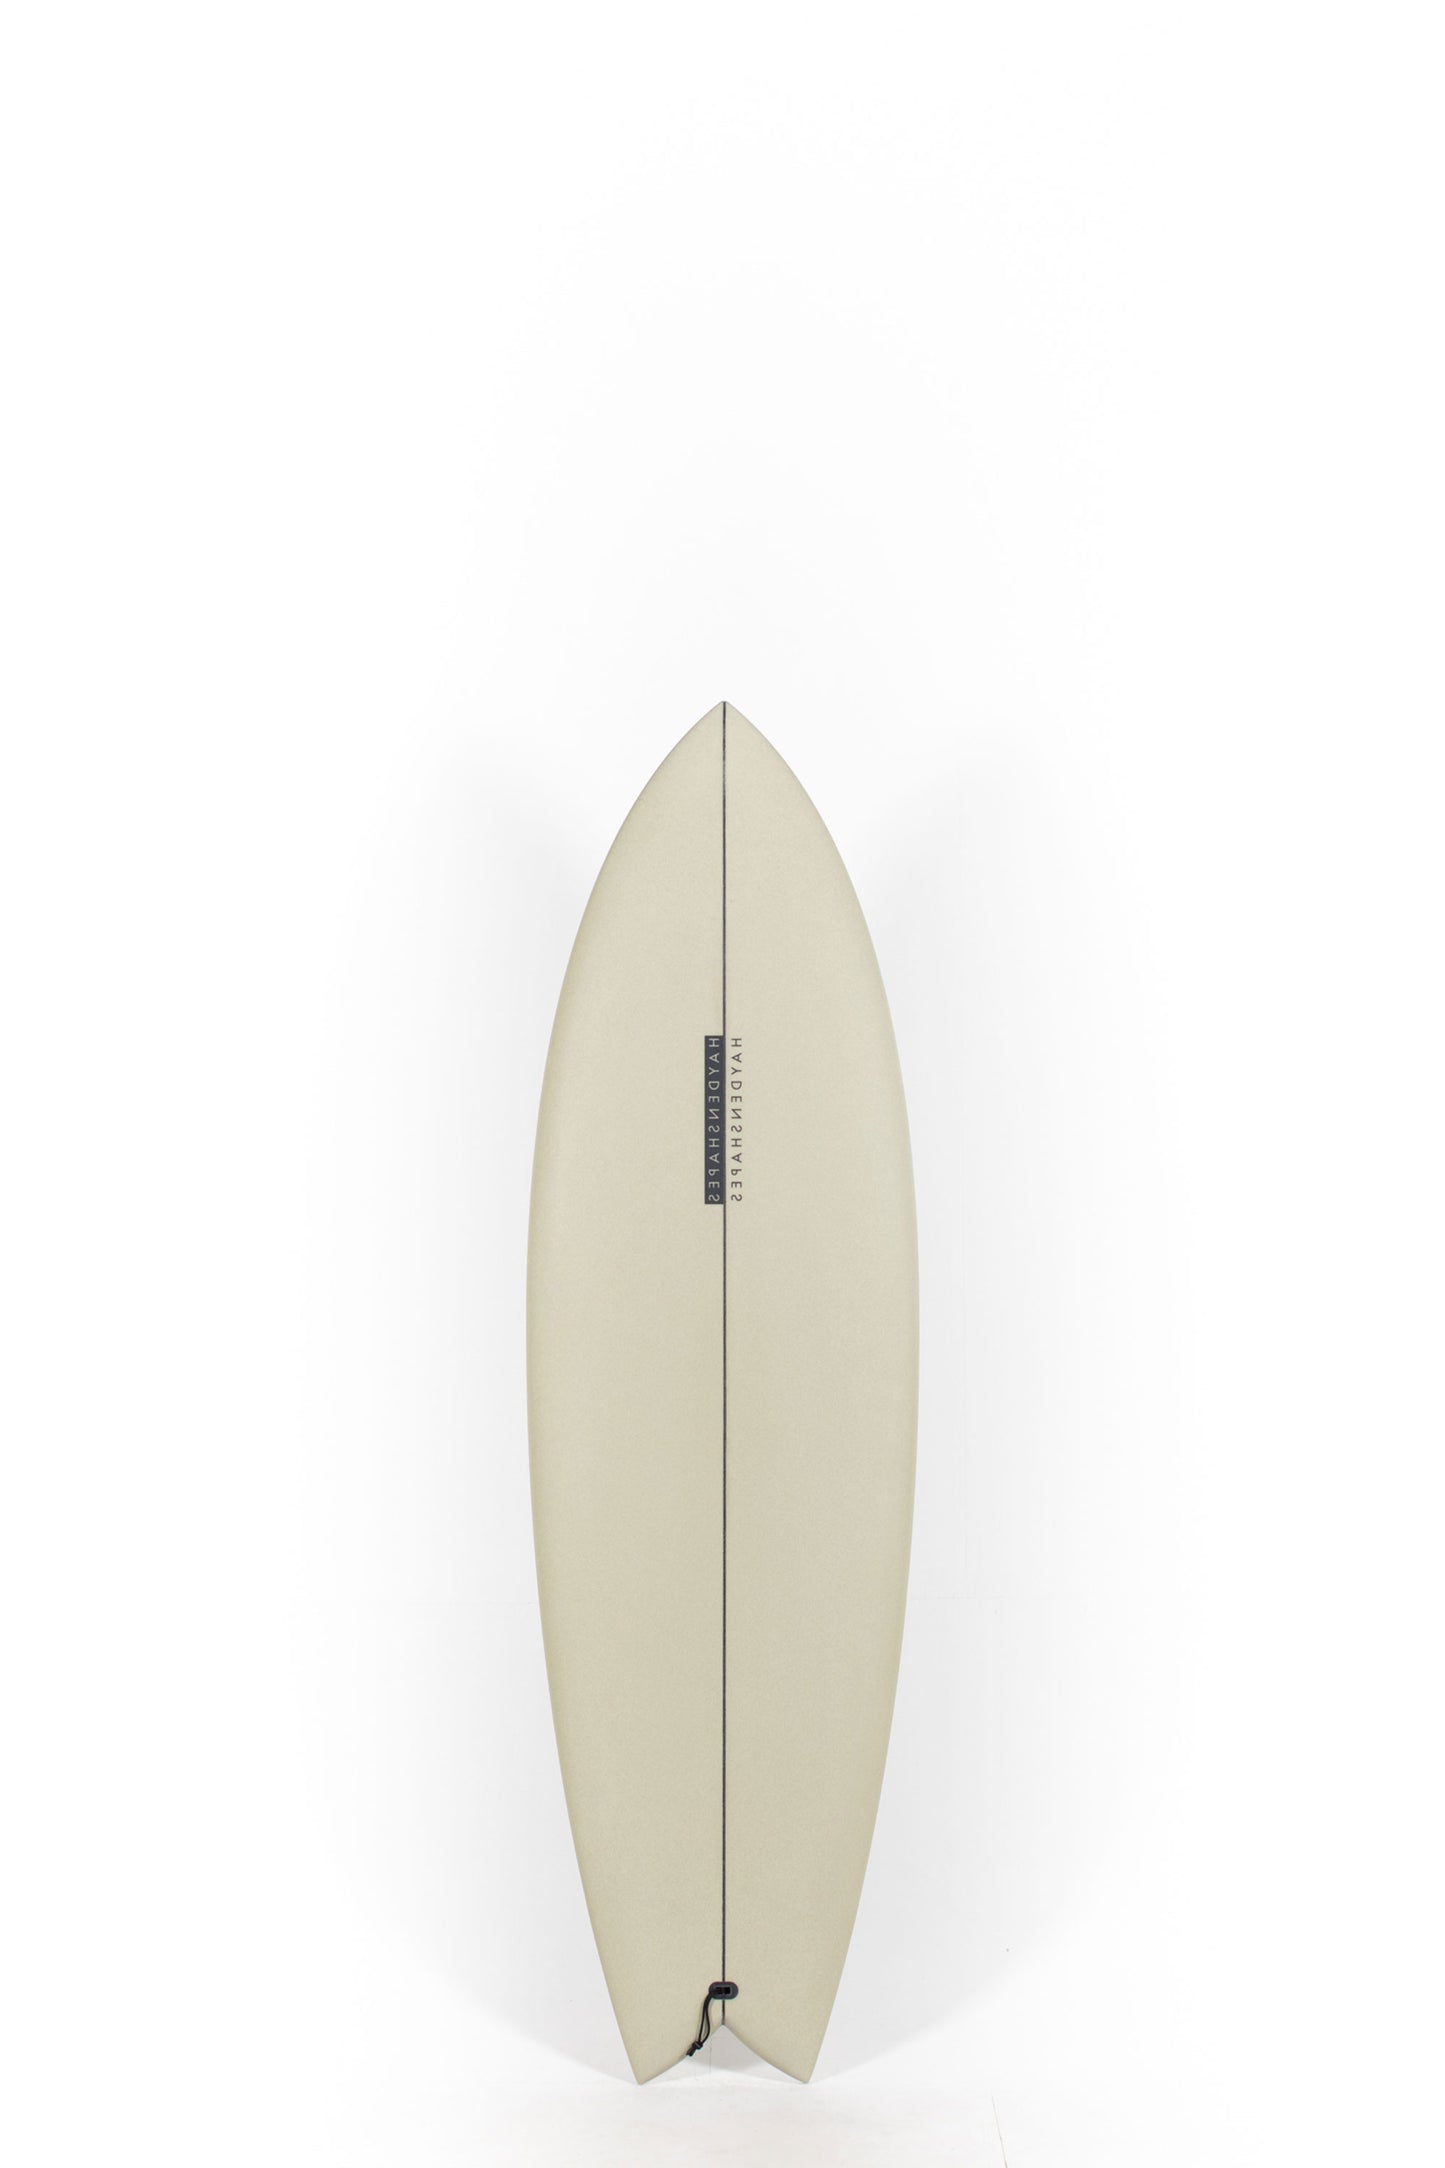 Pukas Surf Shop - HaydenShapes Surfboard - HYPTO KRYPTO TWIN PU - 6'0" X 20 1/2" X 2 3/4" - 36.98L